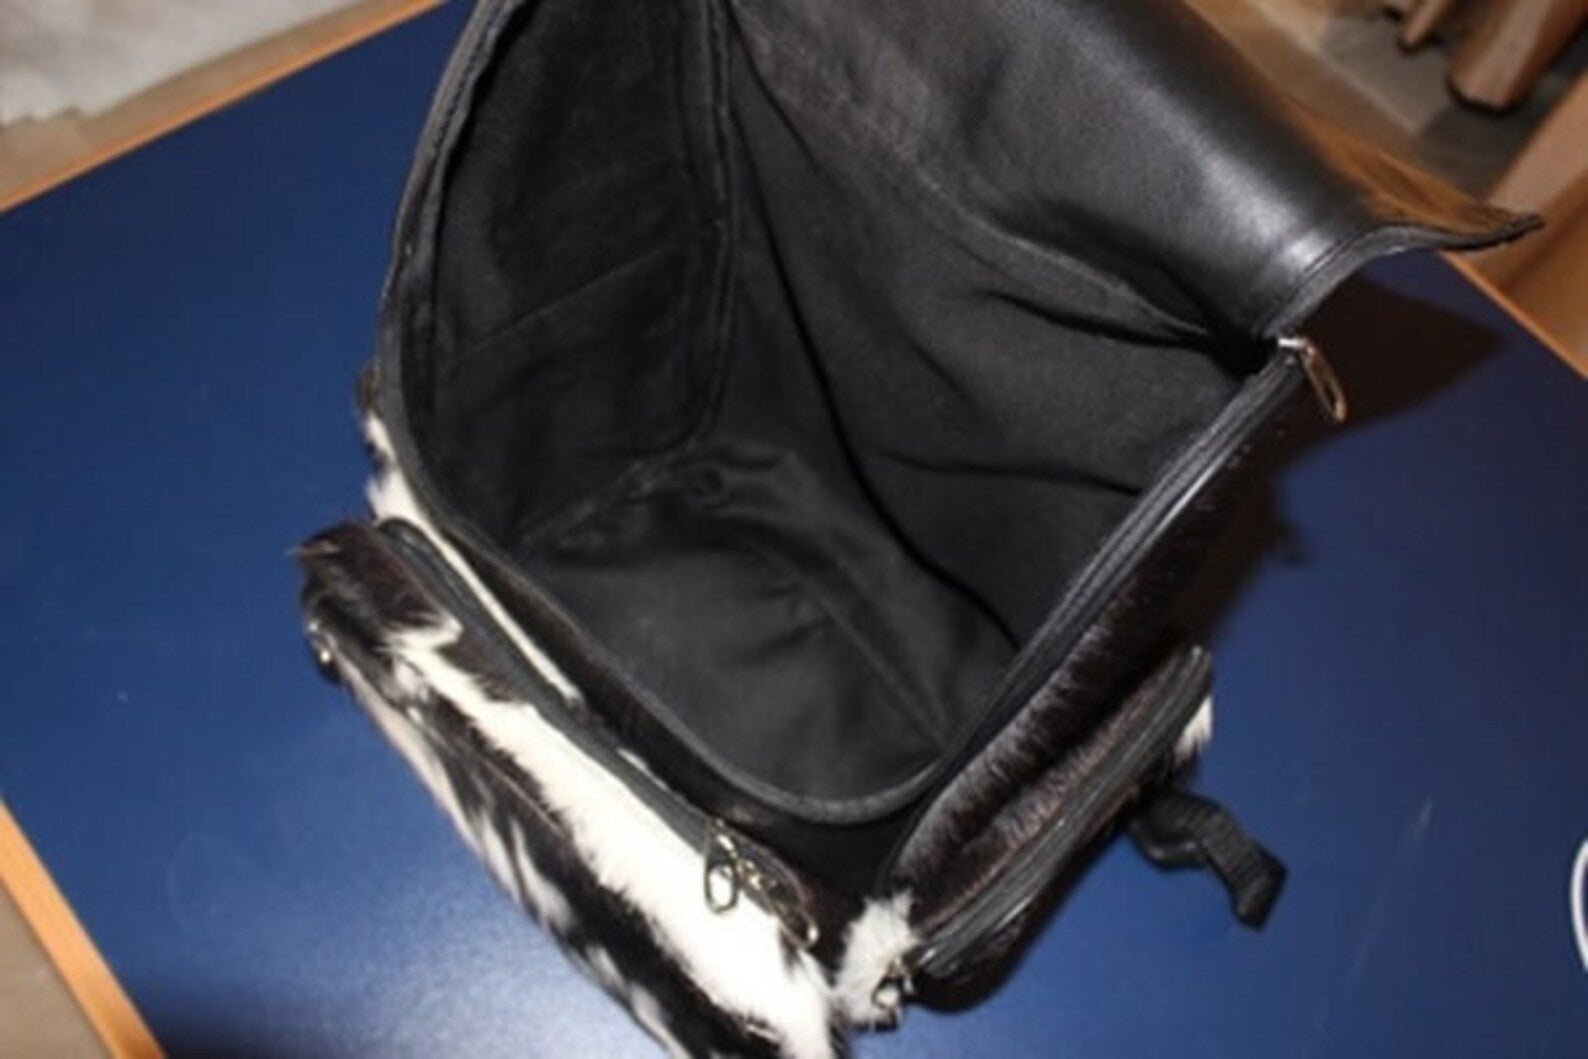 cowhide backpack black backpack laptop backpack genuine leather backpack leather backpack customize backpack laptop backpack travel backpack personalize backpack diaper backpack black leather bag